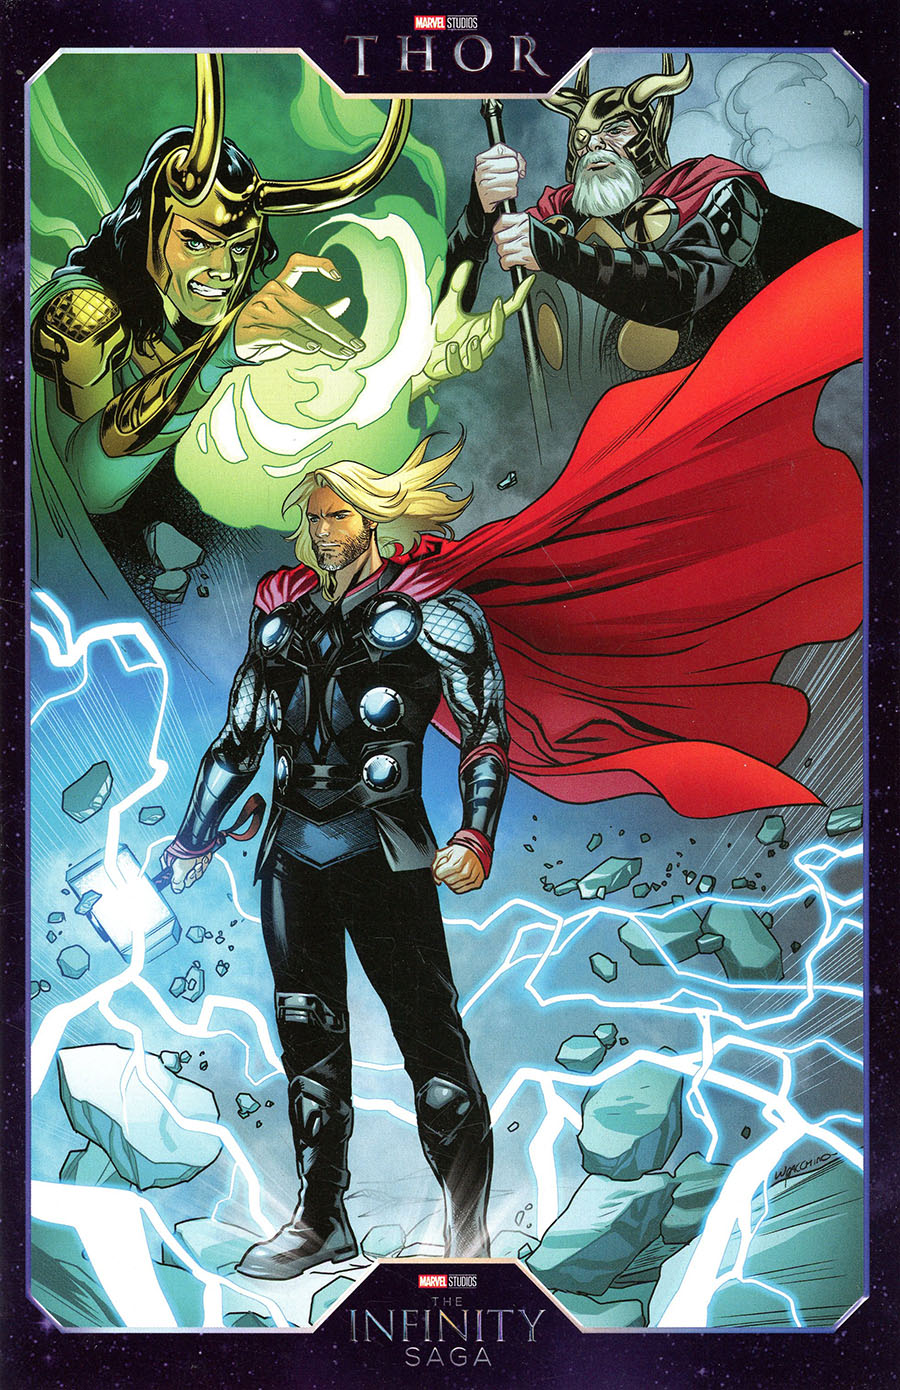 Thor Vol 6 #19 Cover B Variant Emanuela Lupacchino Infinity Saga Phase 1 Cover